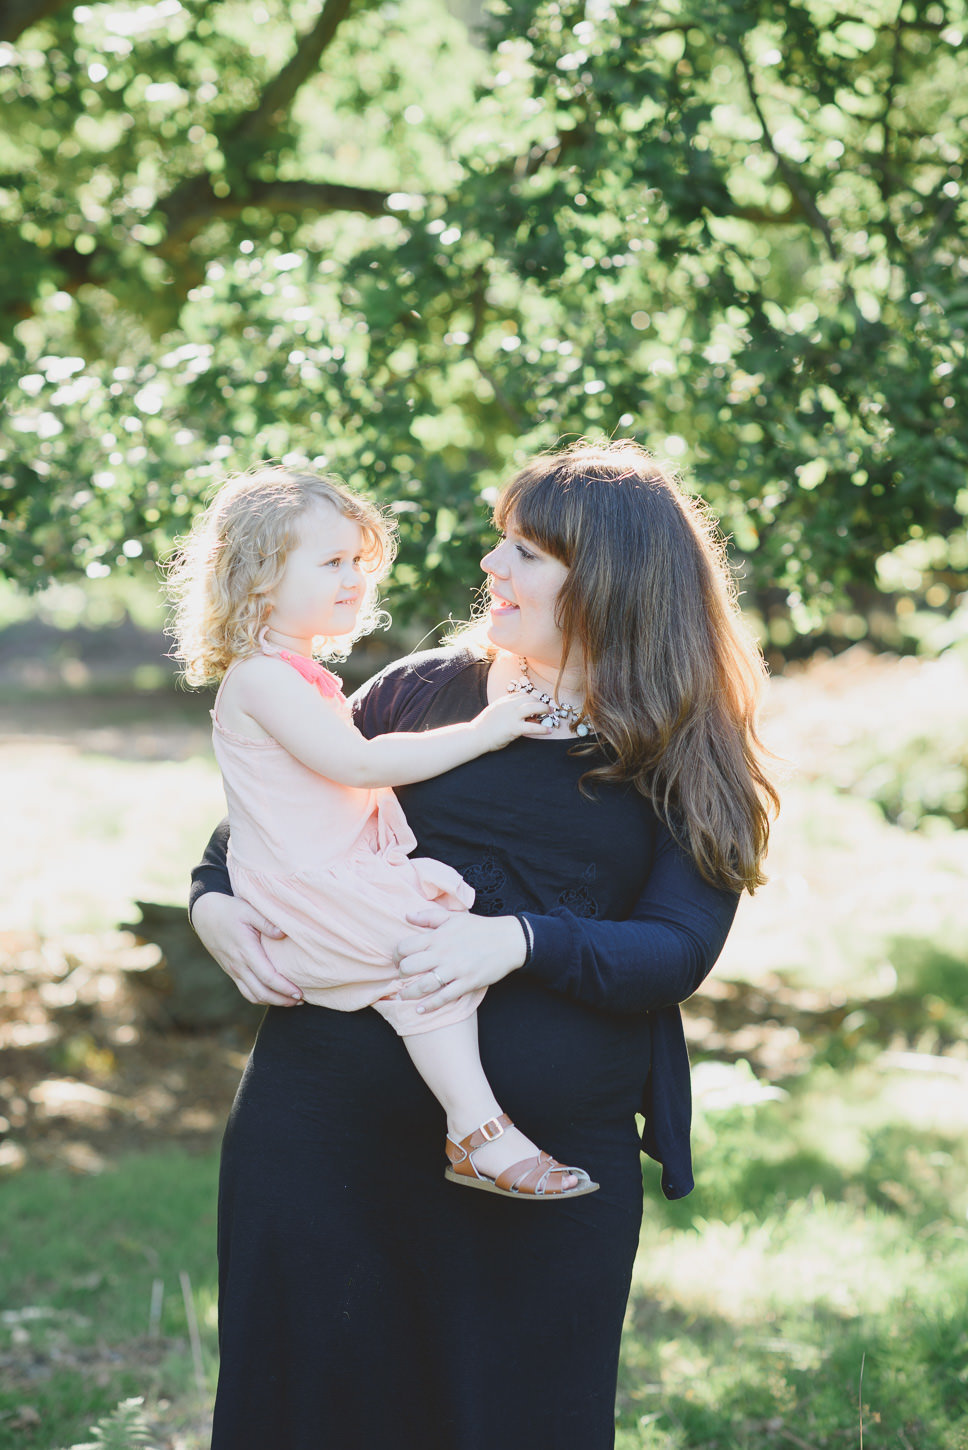 Maternity-family photography tunbridge wells and sevenoaks -Susan Arnold Photography-8